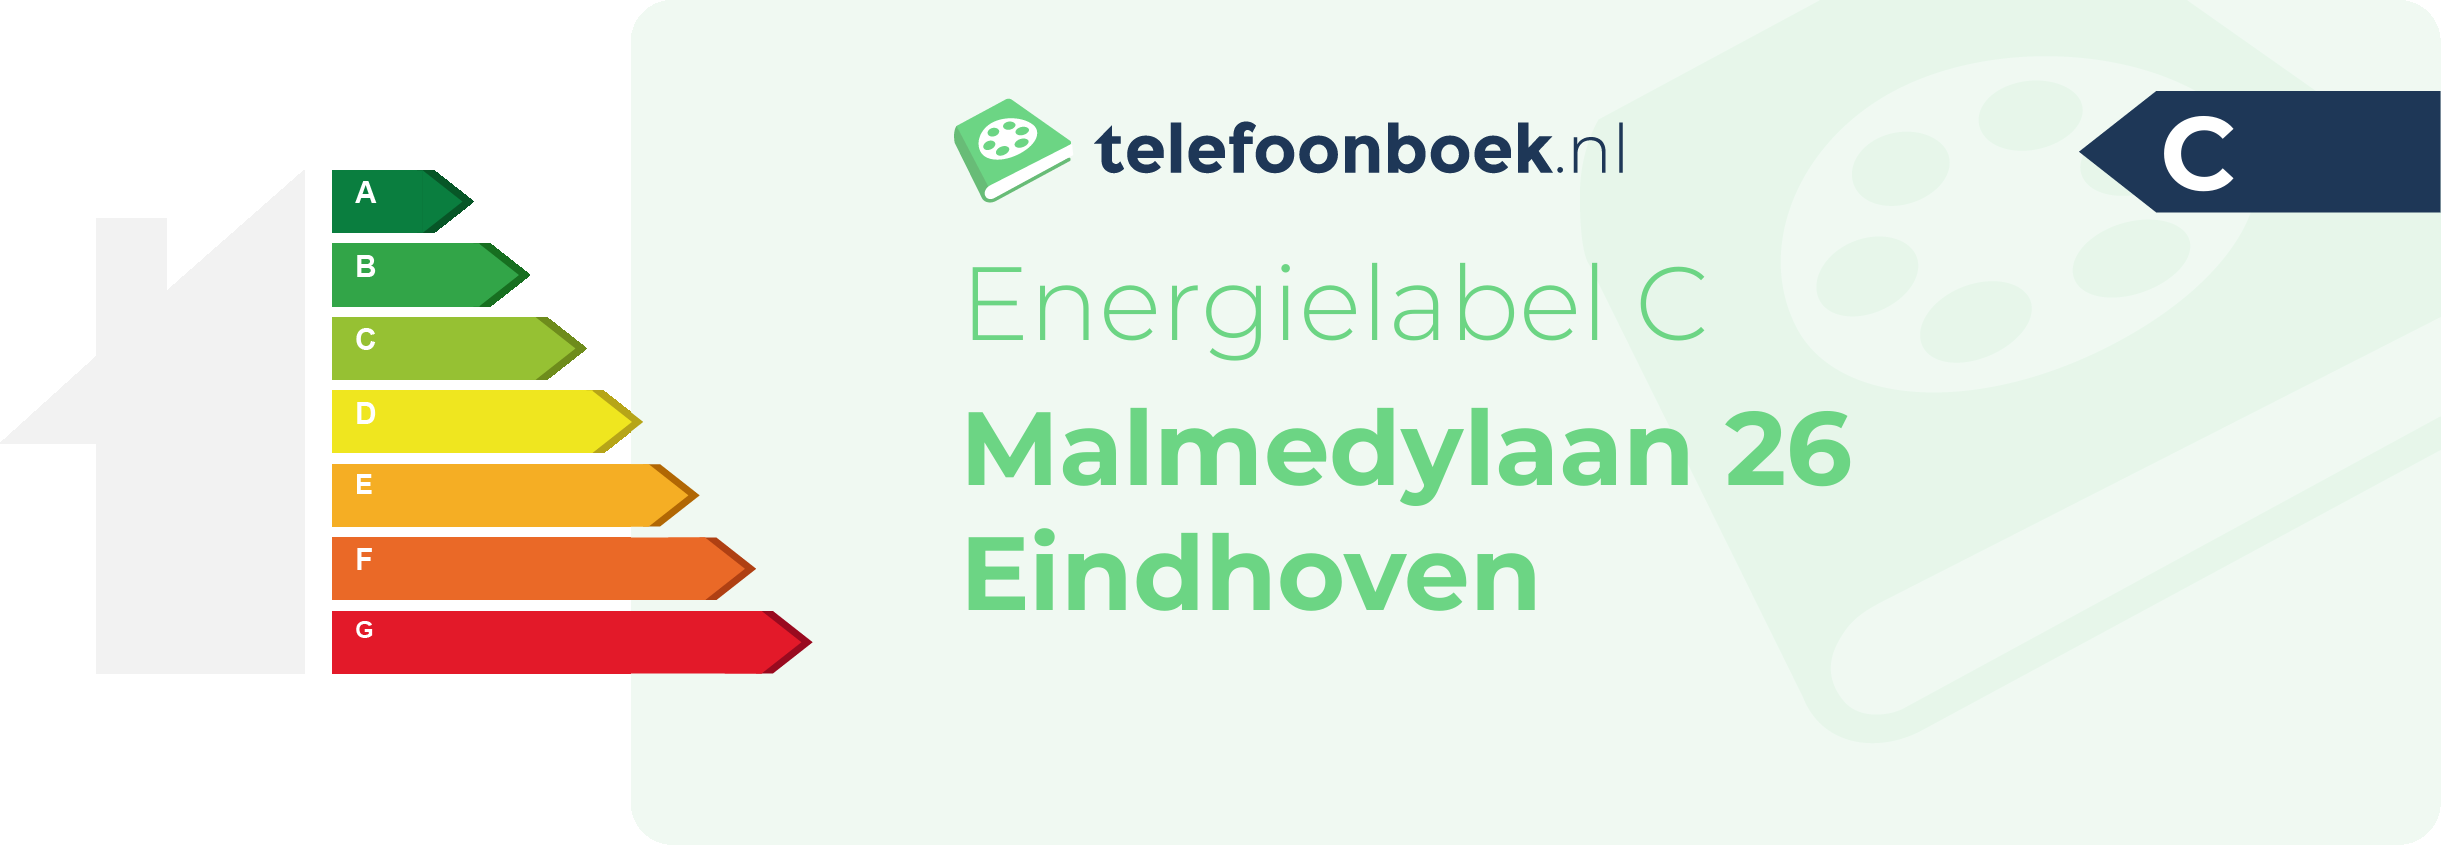 Energielabel Malmedylaan 26 Eindhoven